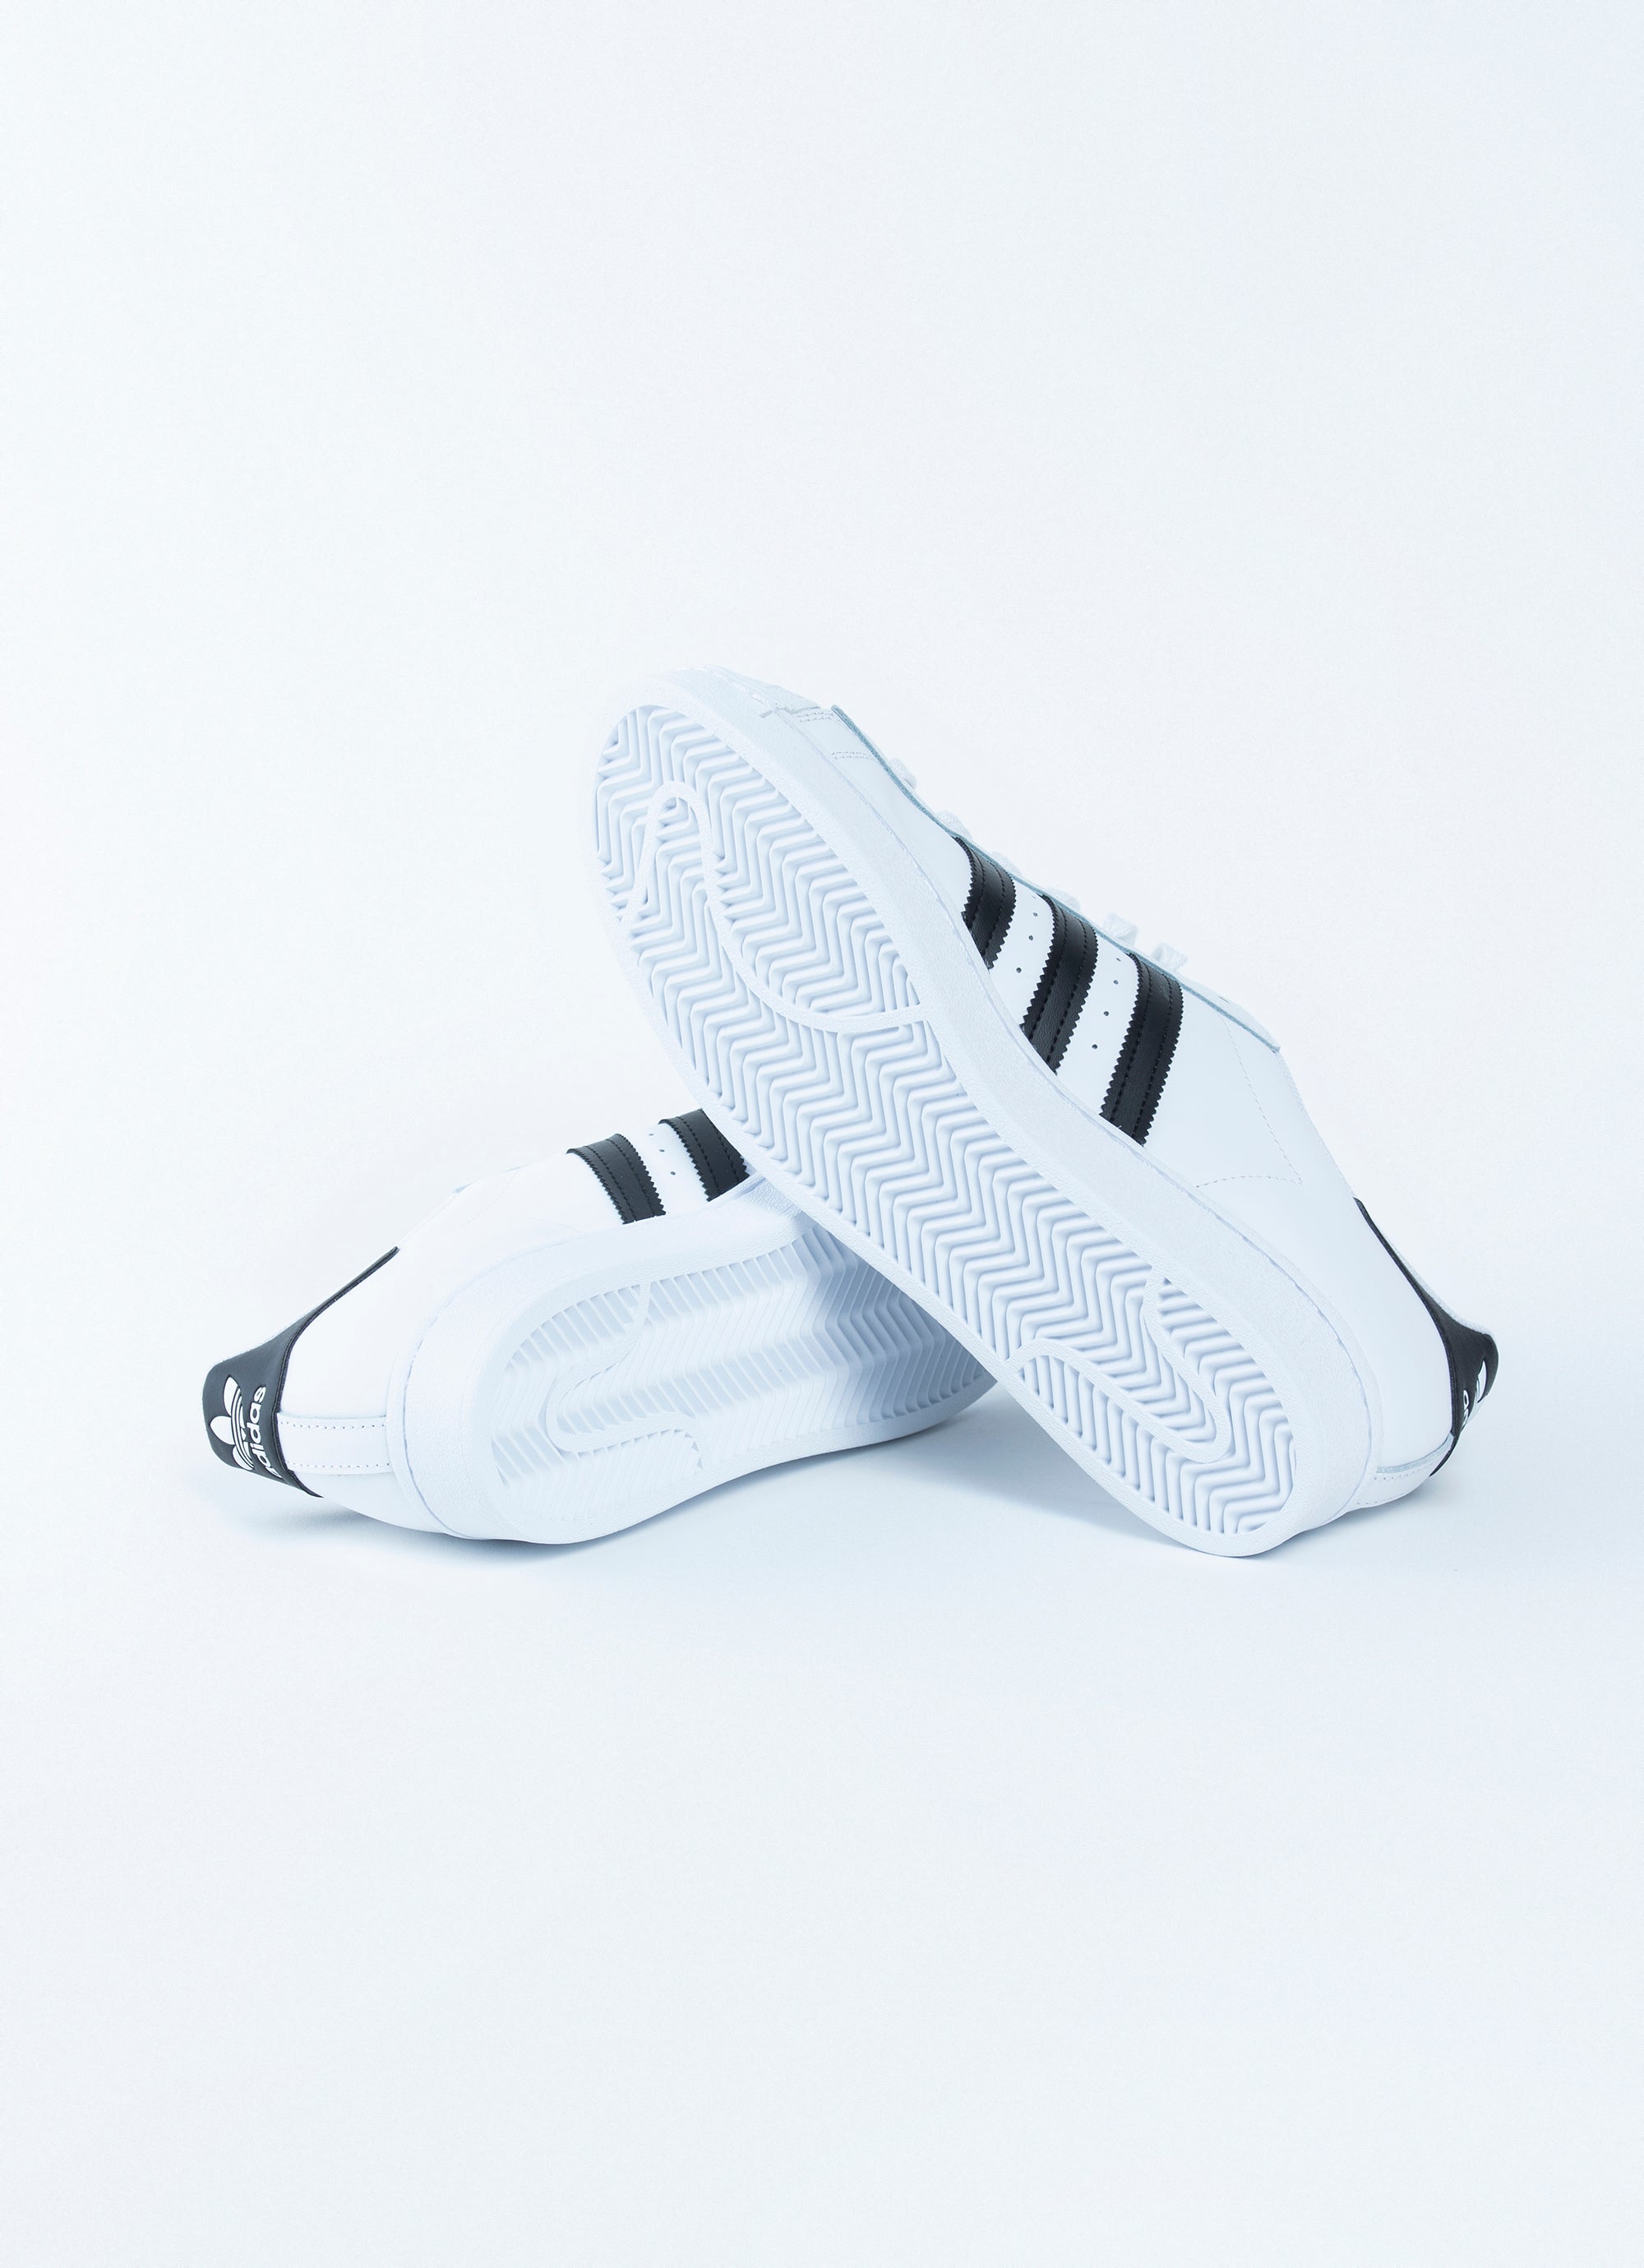 Adidas Originals Superstar Shoes in Unknown | Red Rat